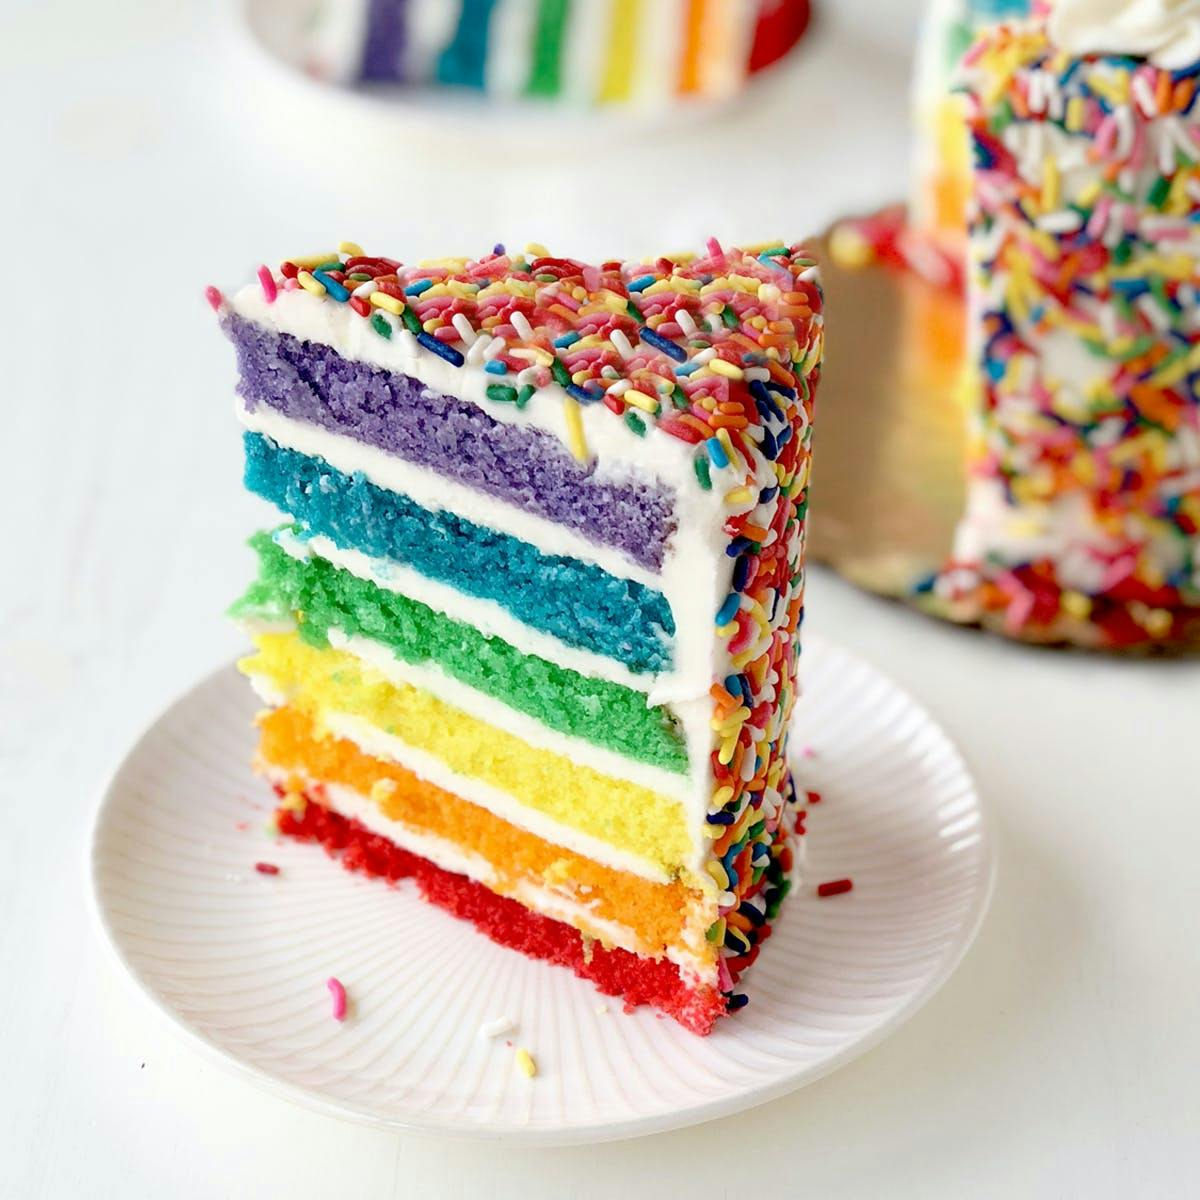 Buy/Send Happy Birthday Boss Fruit Cake Online @ Rs. 1399 - SendBestGift